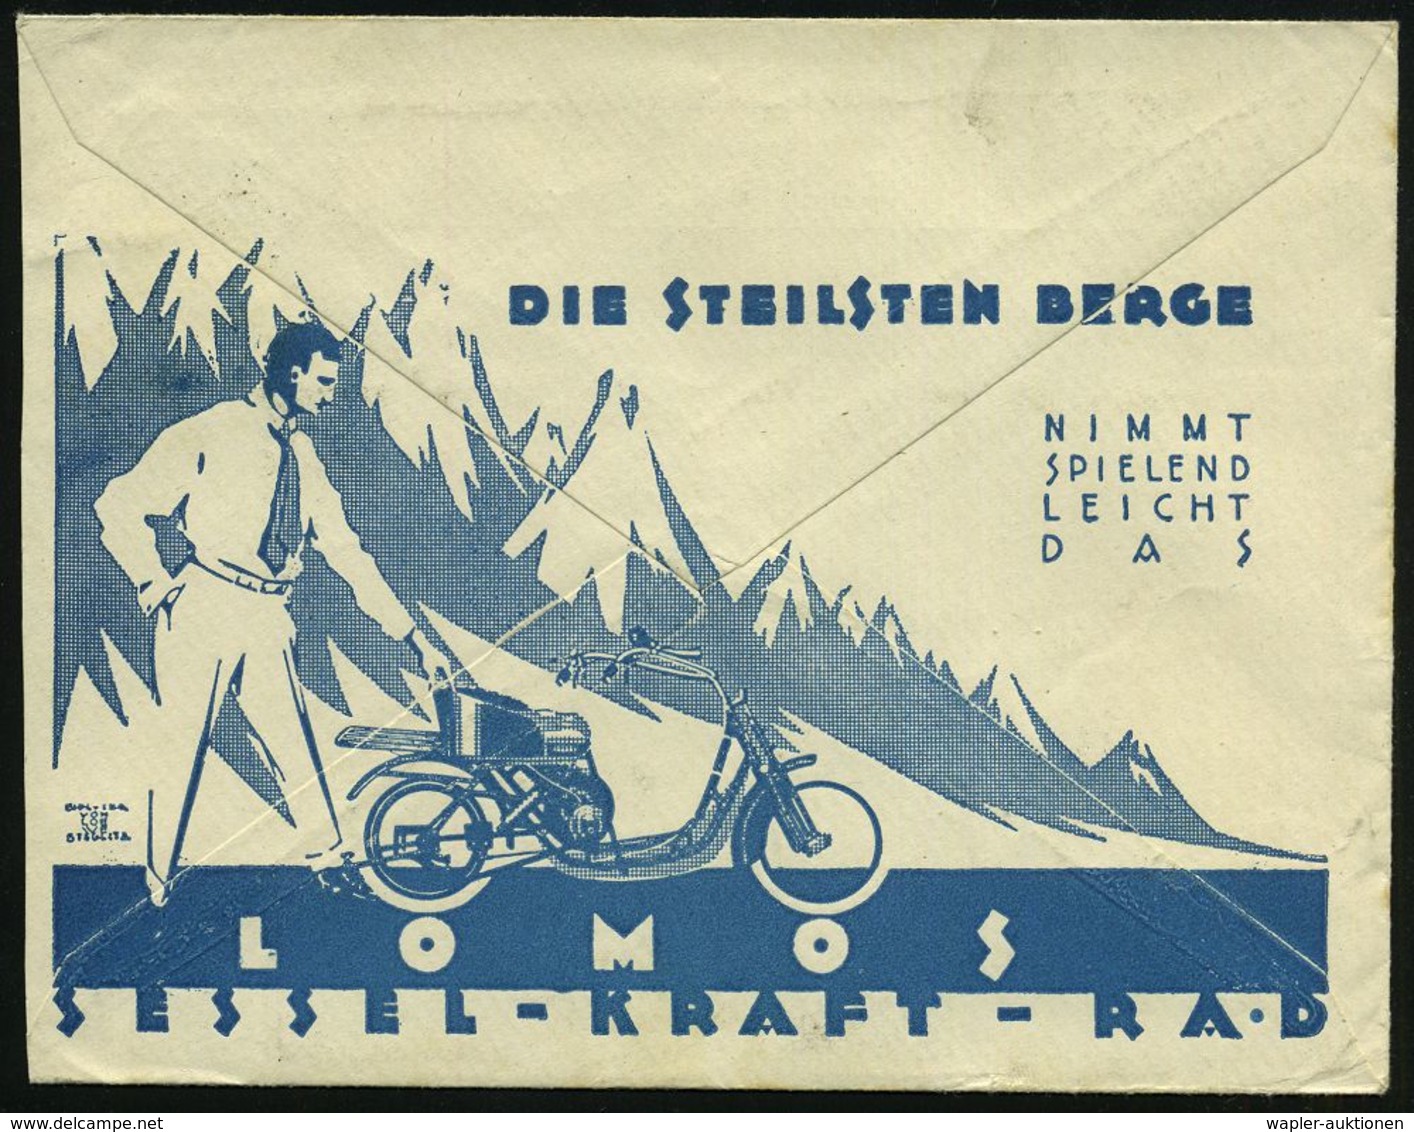 Berlin SW 68 1922 Reklame-Bf.: Eichler & Co., Rs. Grafik "LOMOS SESSEL-KRAFT-RAD" (sign. Von LOEWE) Dekorat. Infla-Fernb - Motos